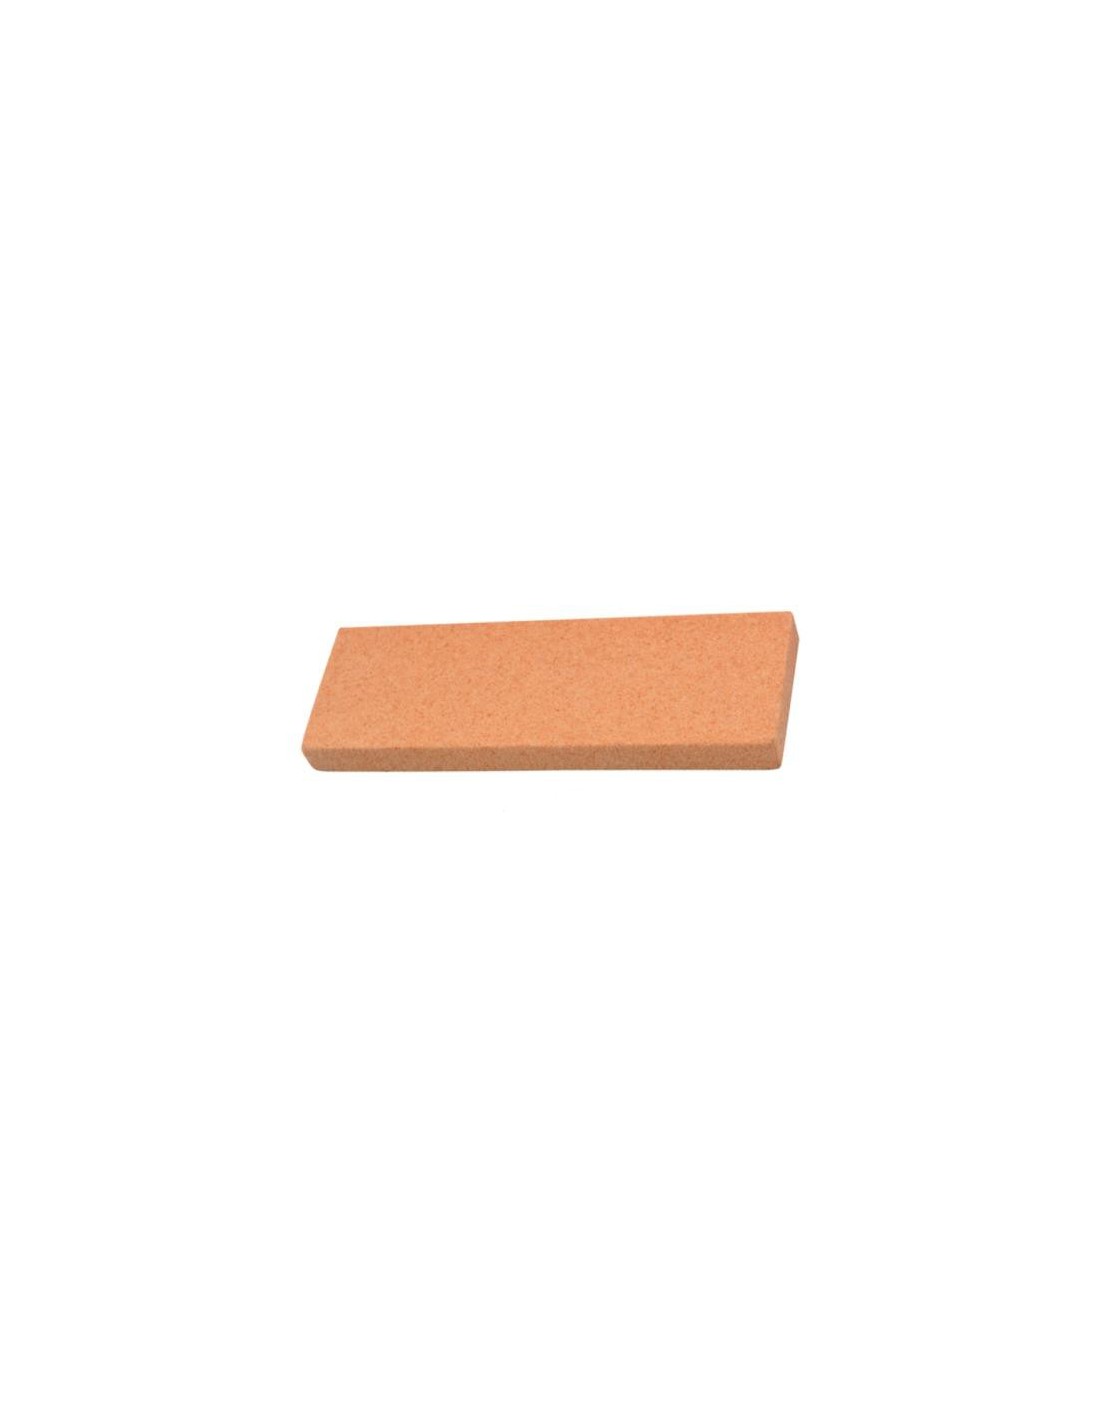 Pietra per affilare Rettangolare Grana media Arancio 75 x 25 x 7 mm